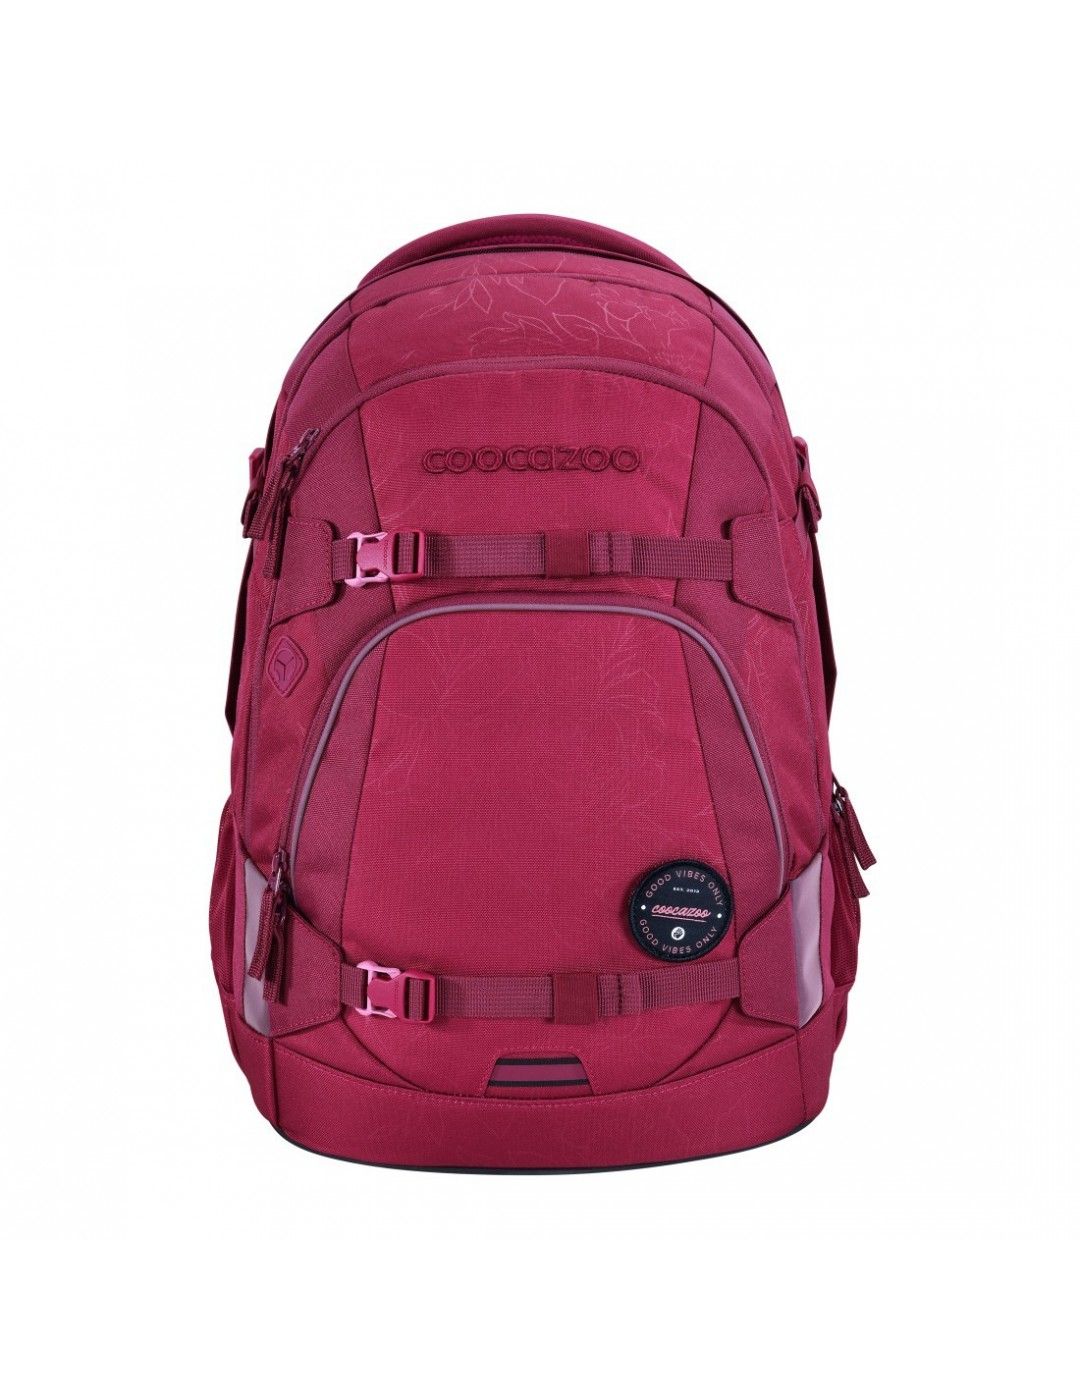 School backpack Coocazoo MATE Berry Boost